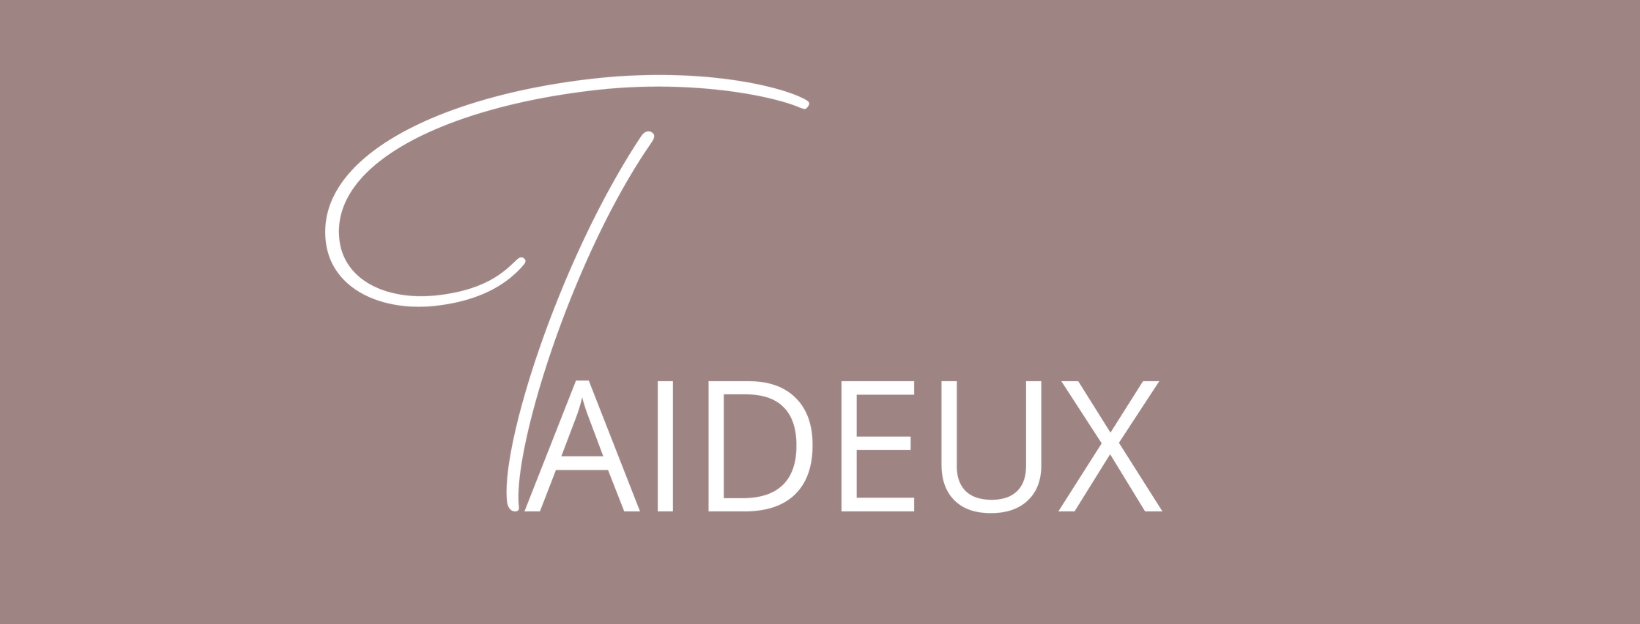 Taideux logo